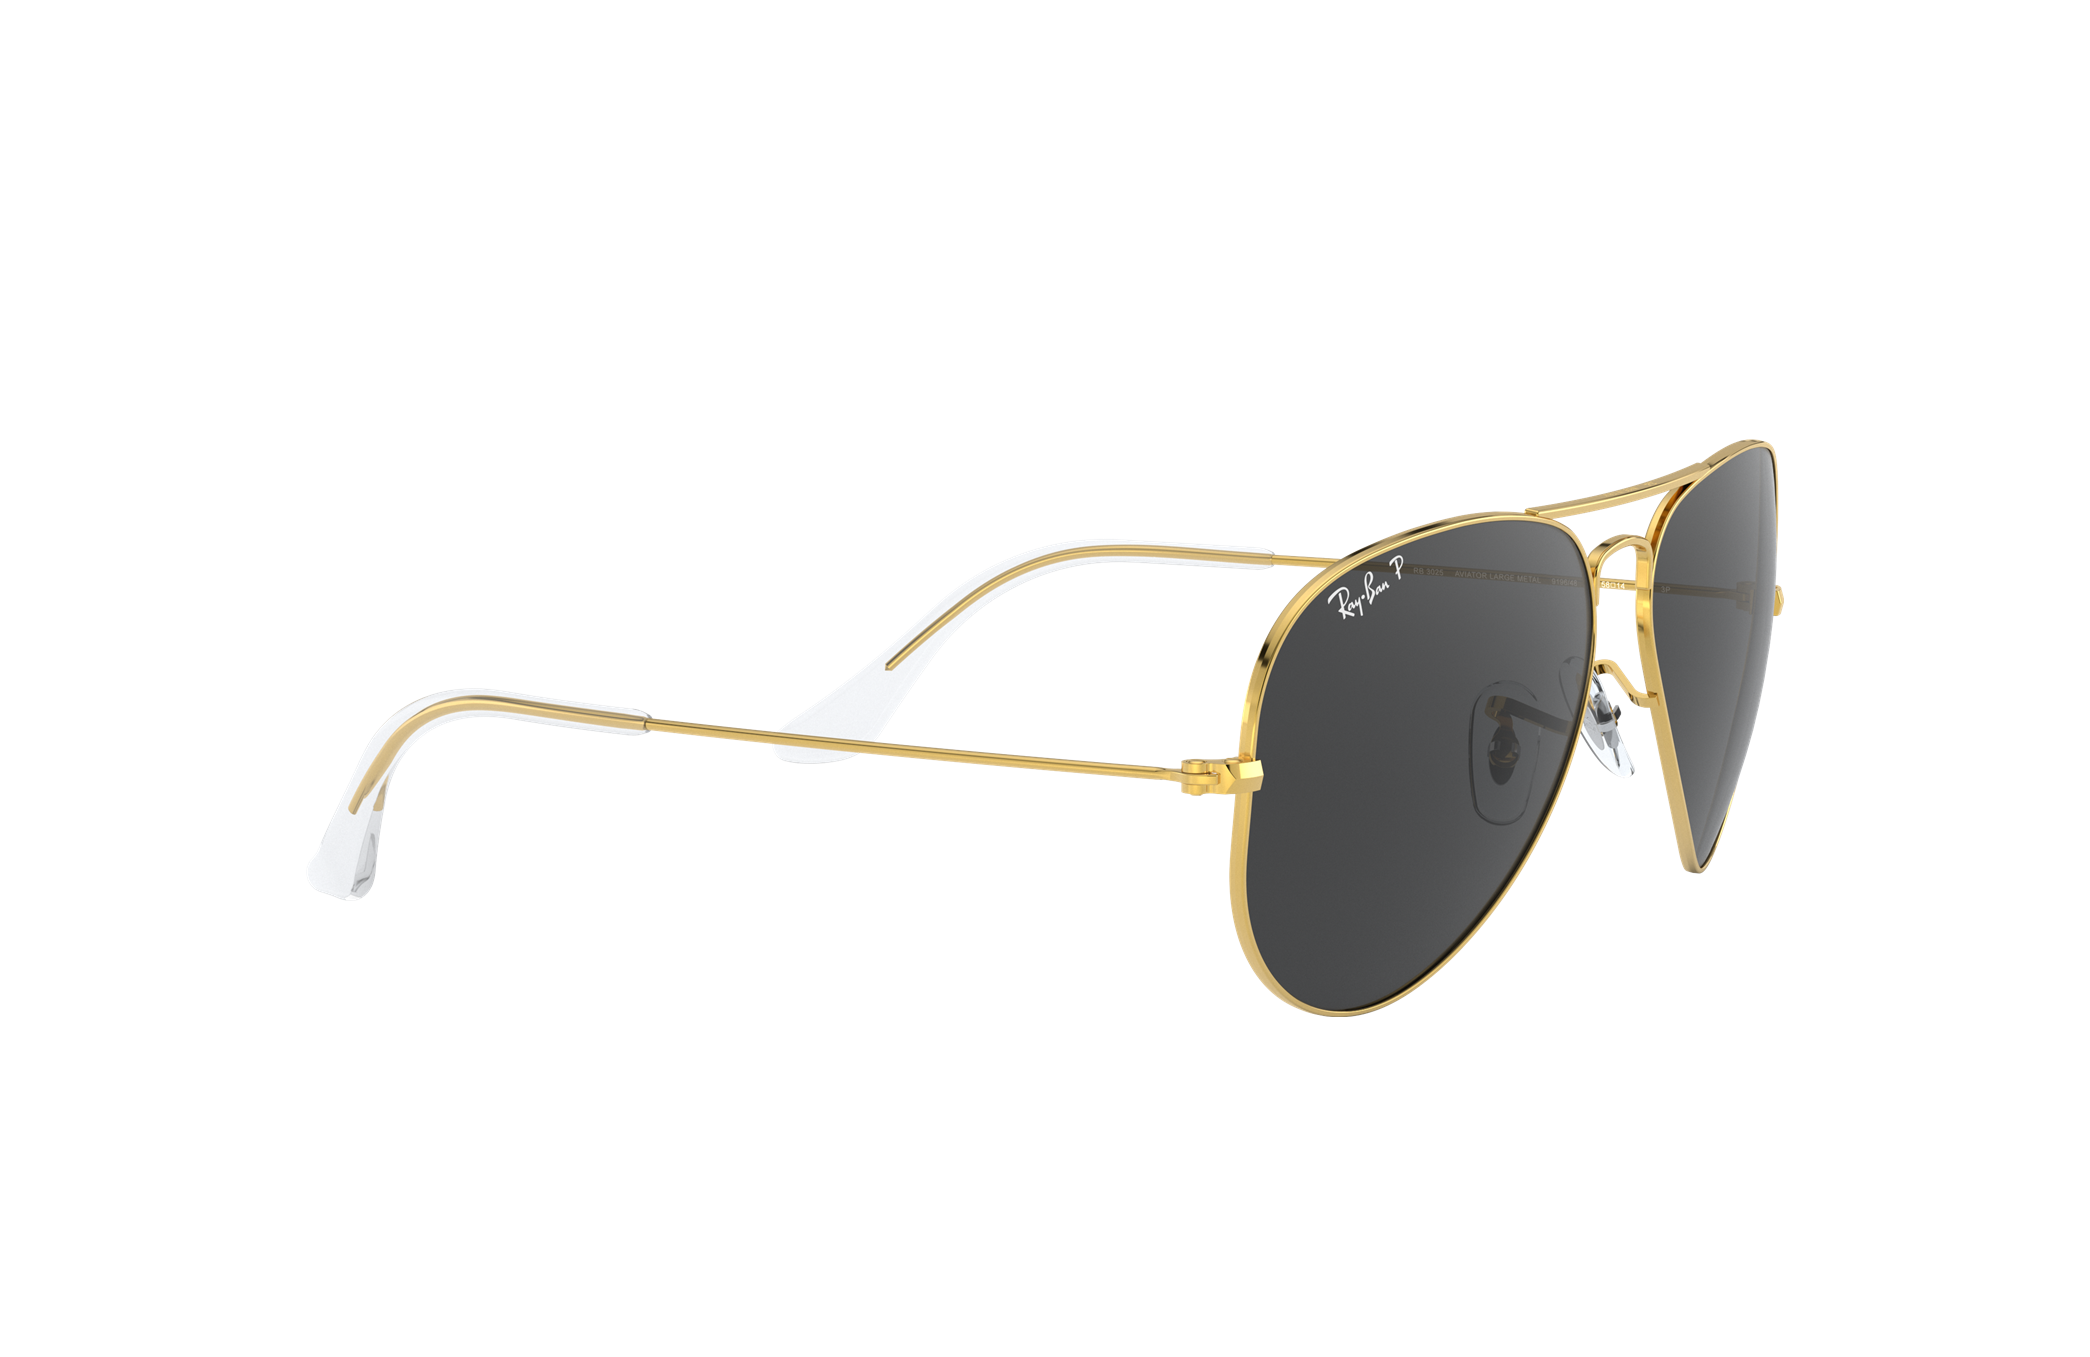 Ray-Ban Aviator Classic G-15 Sunglasses RB 3025 - Flight Sunglasses